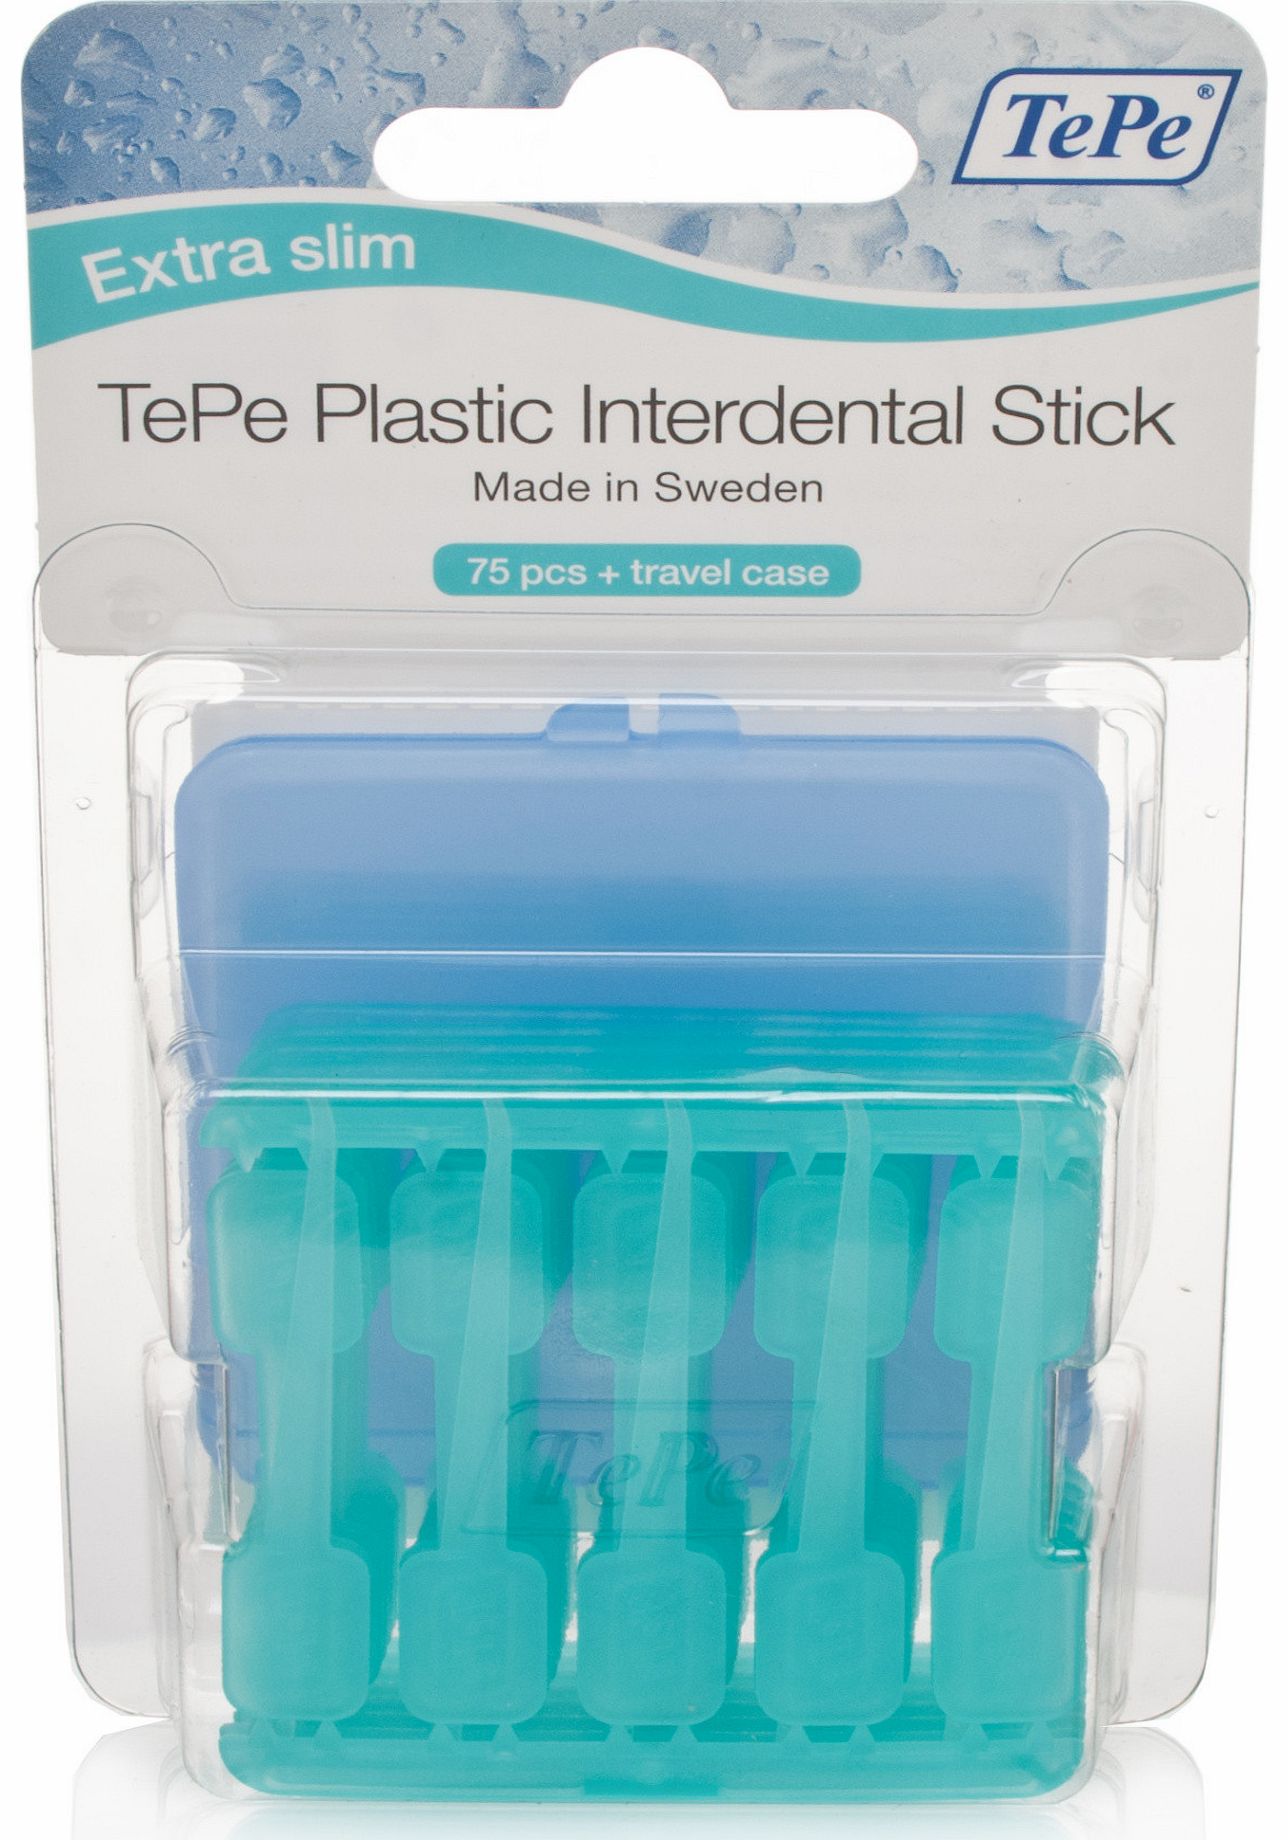 Plastic Interdental Sticks Extra Slim